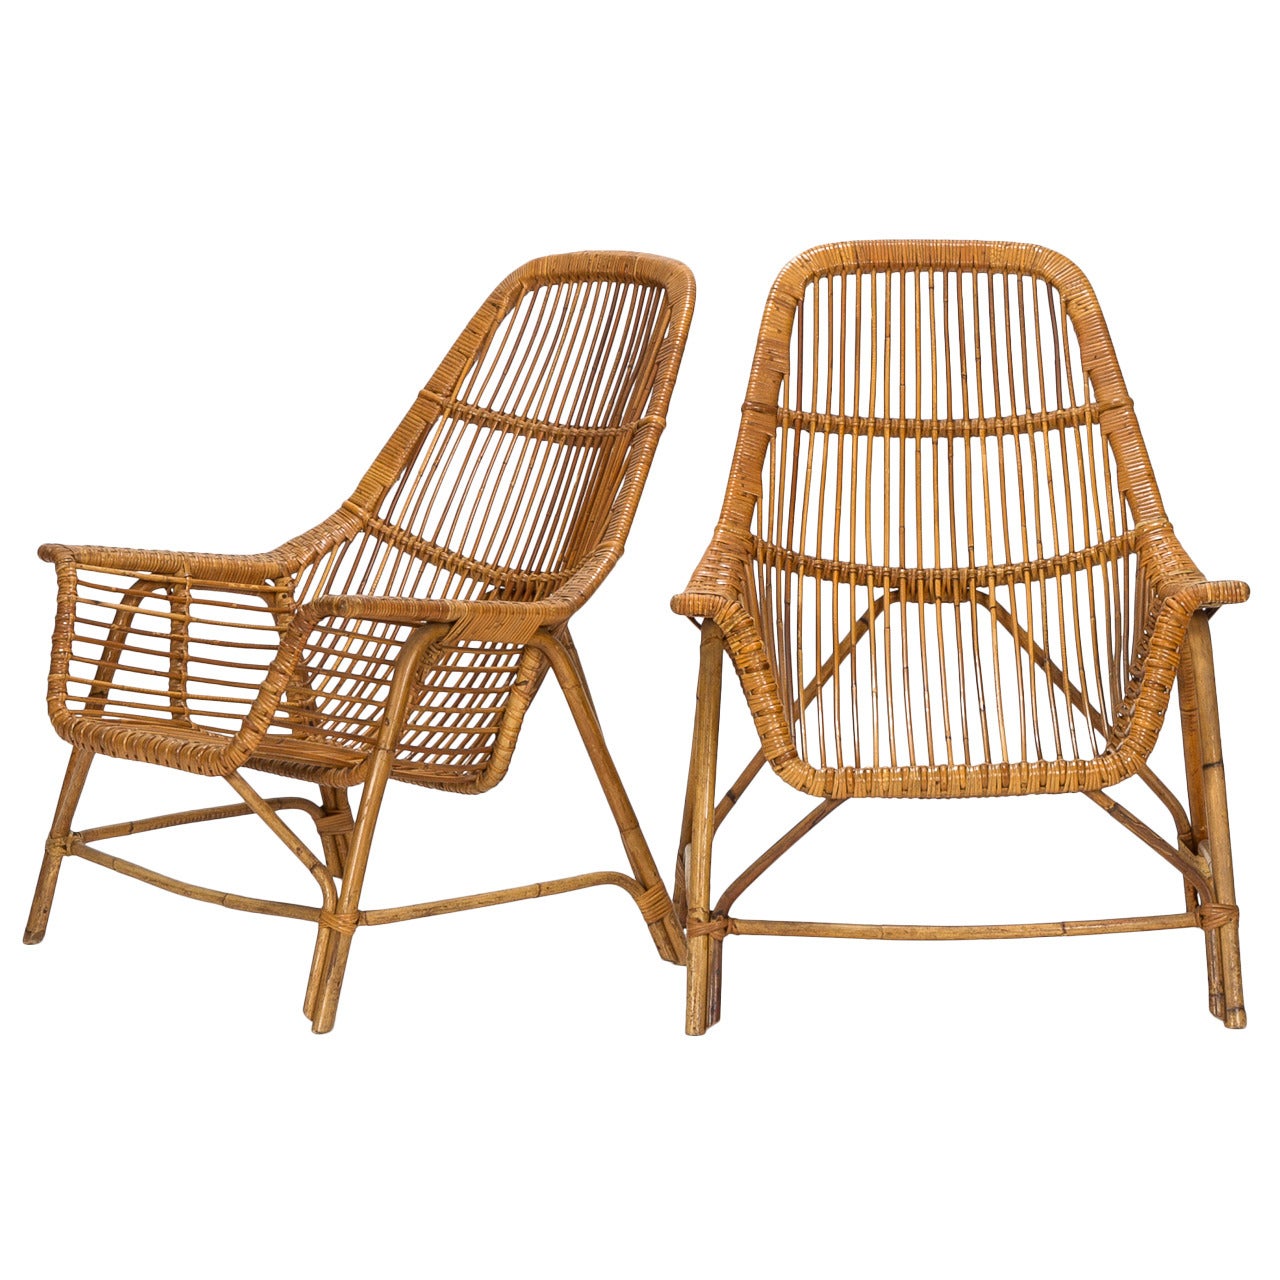 Pair of Italian Wicker Chairs by George Coslin, 1956